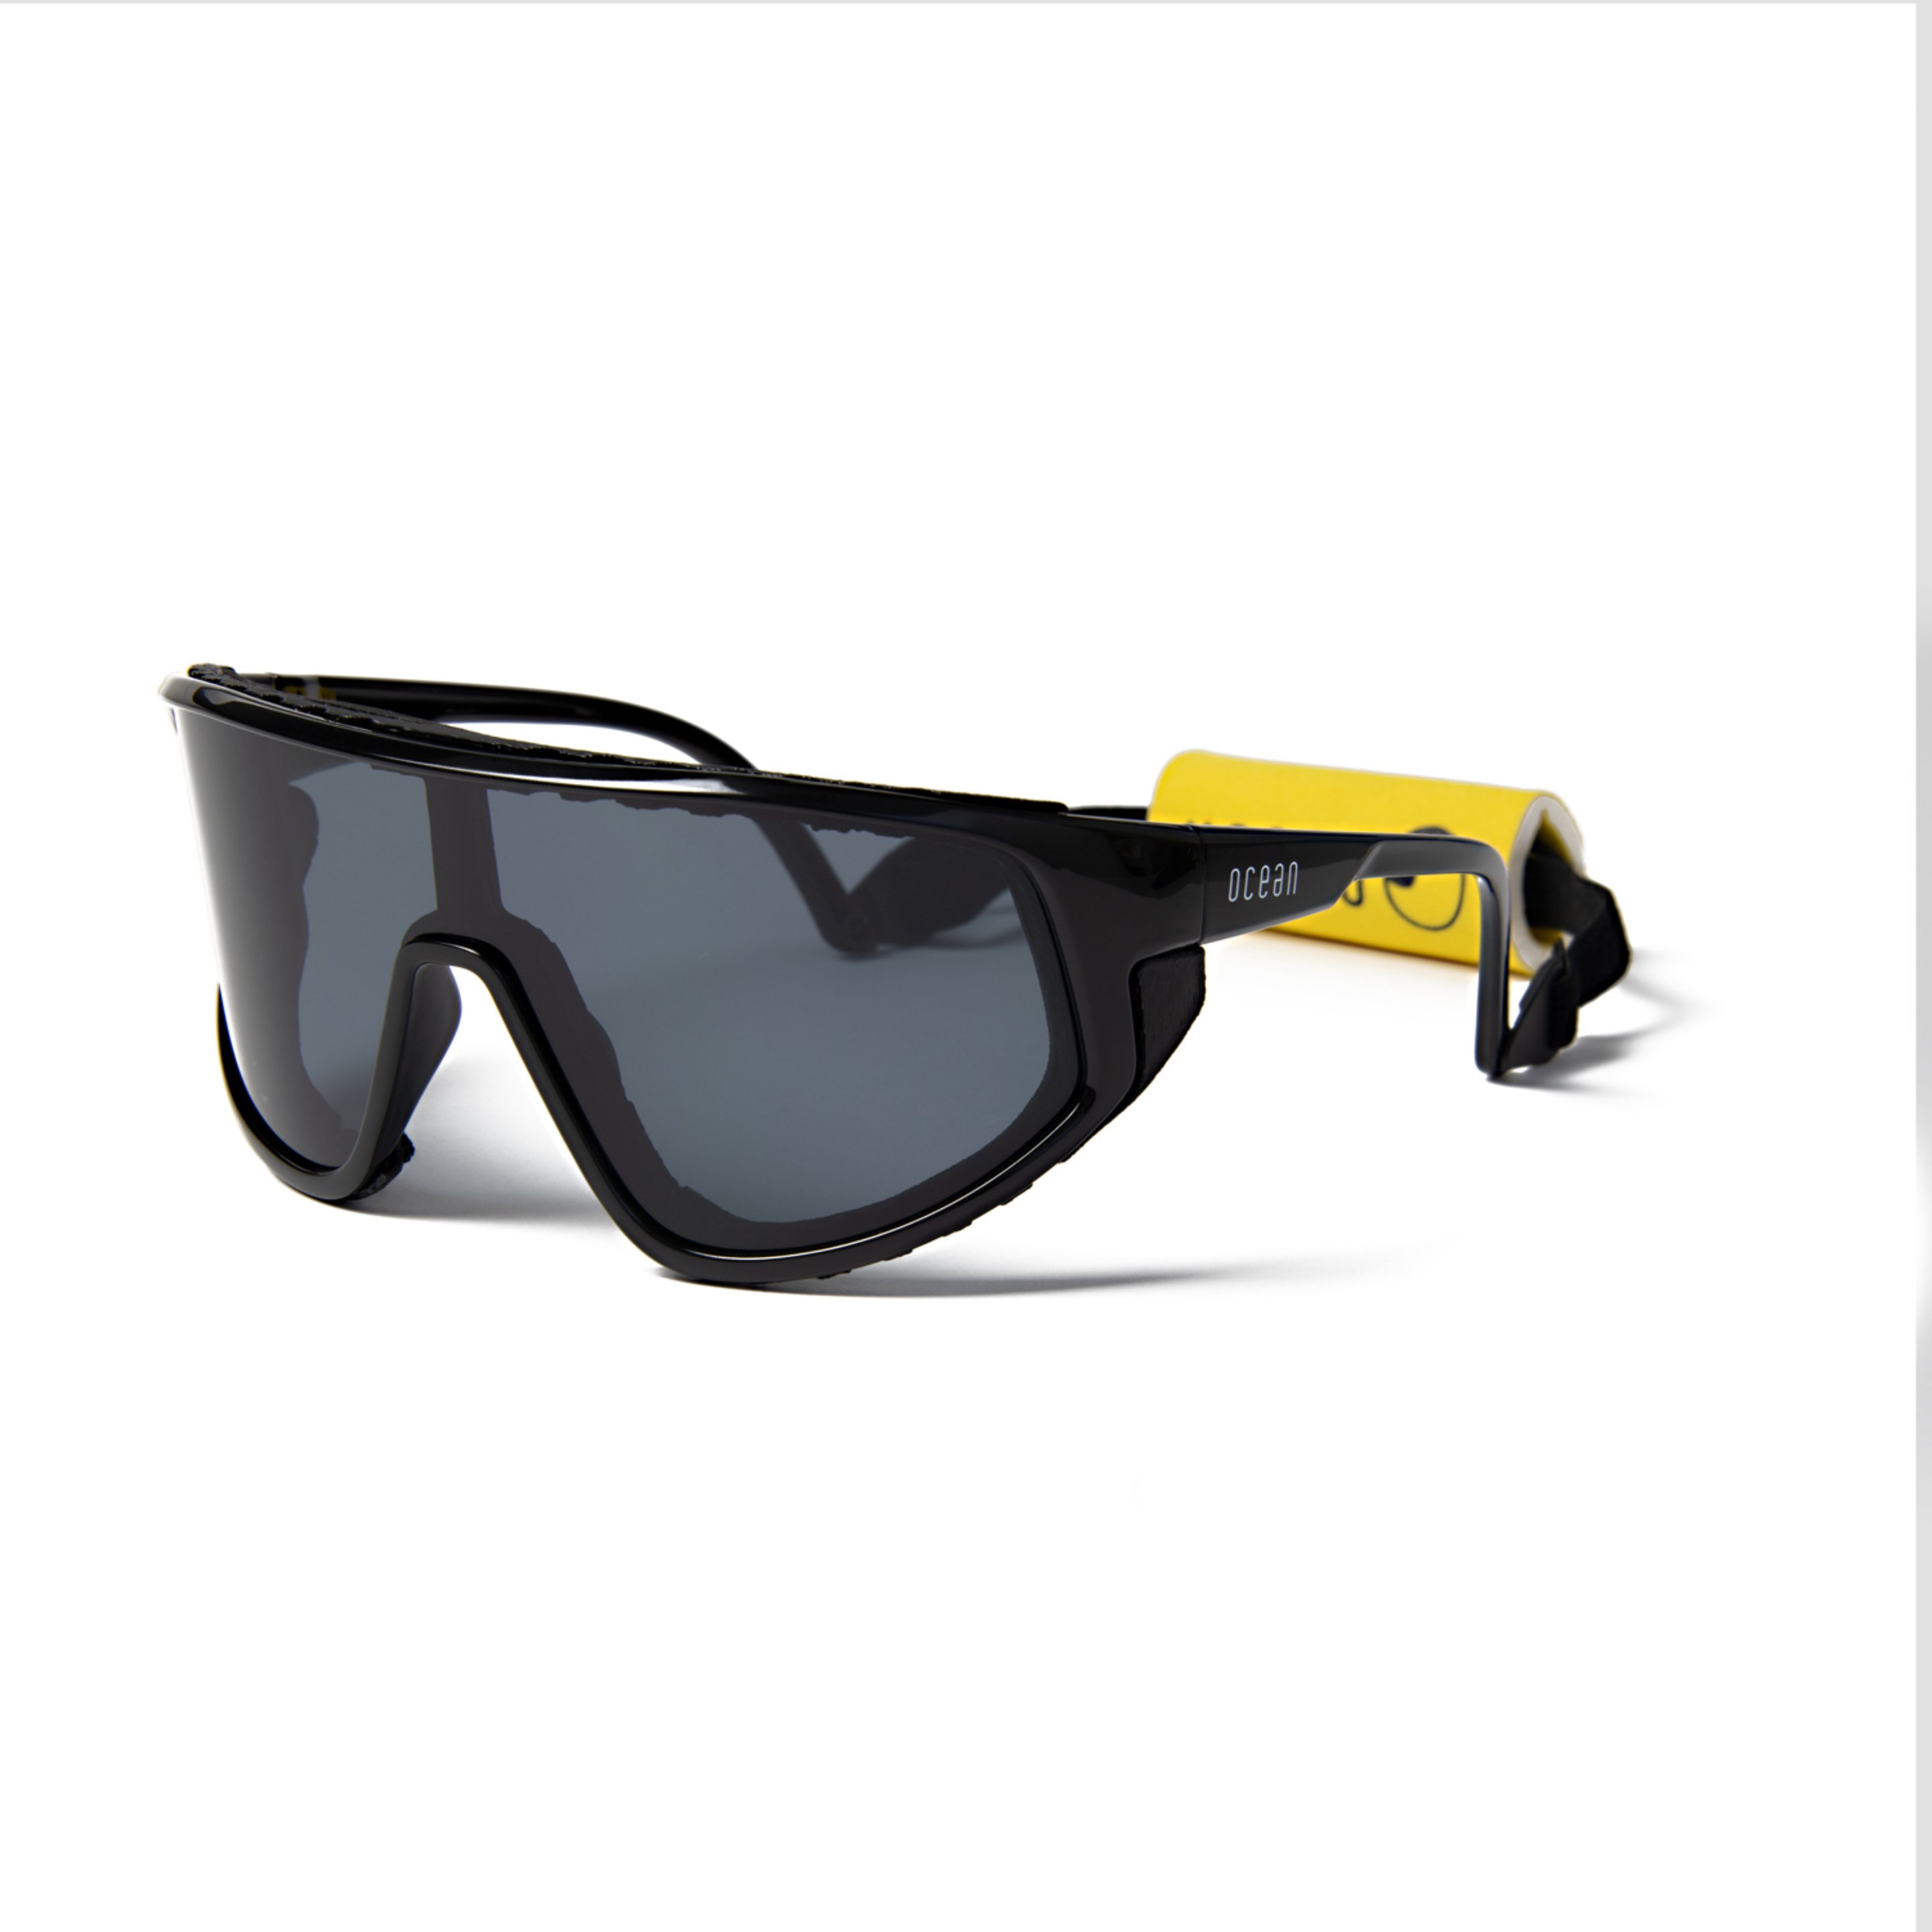 Gafas De Sol Técnicas Para La Práctica De Deportes De Agua Killy Ocean Sunglasses